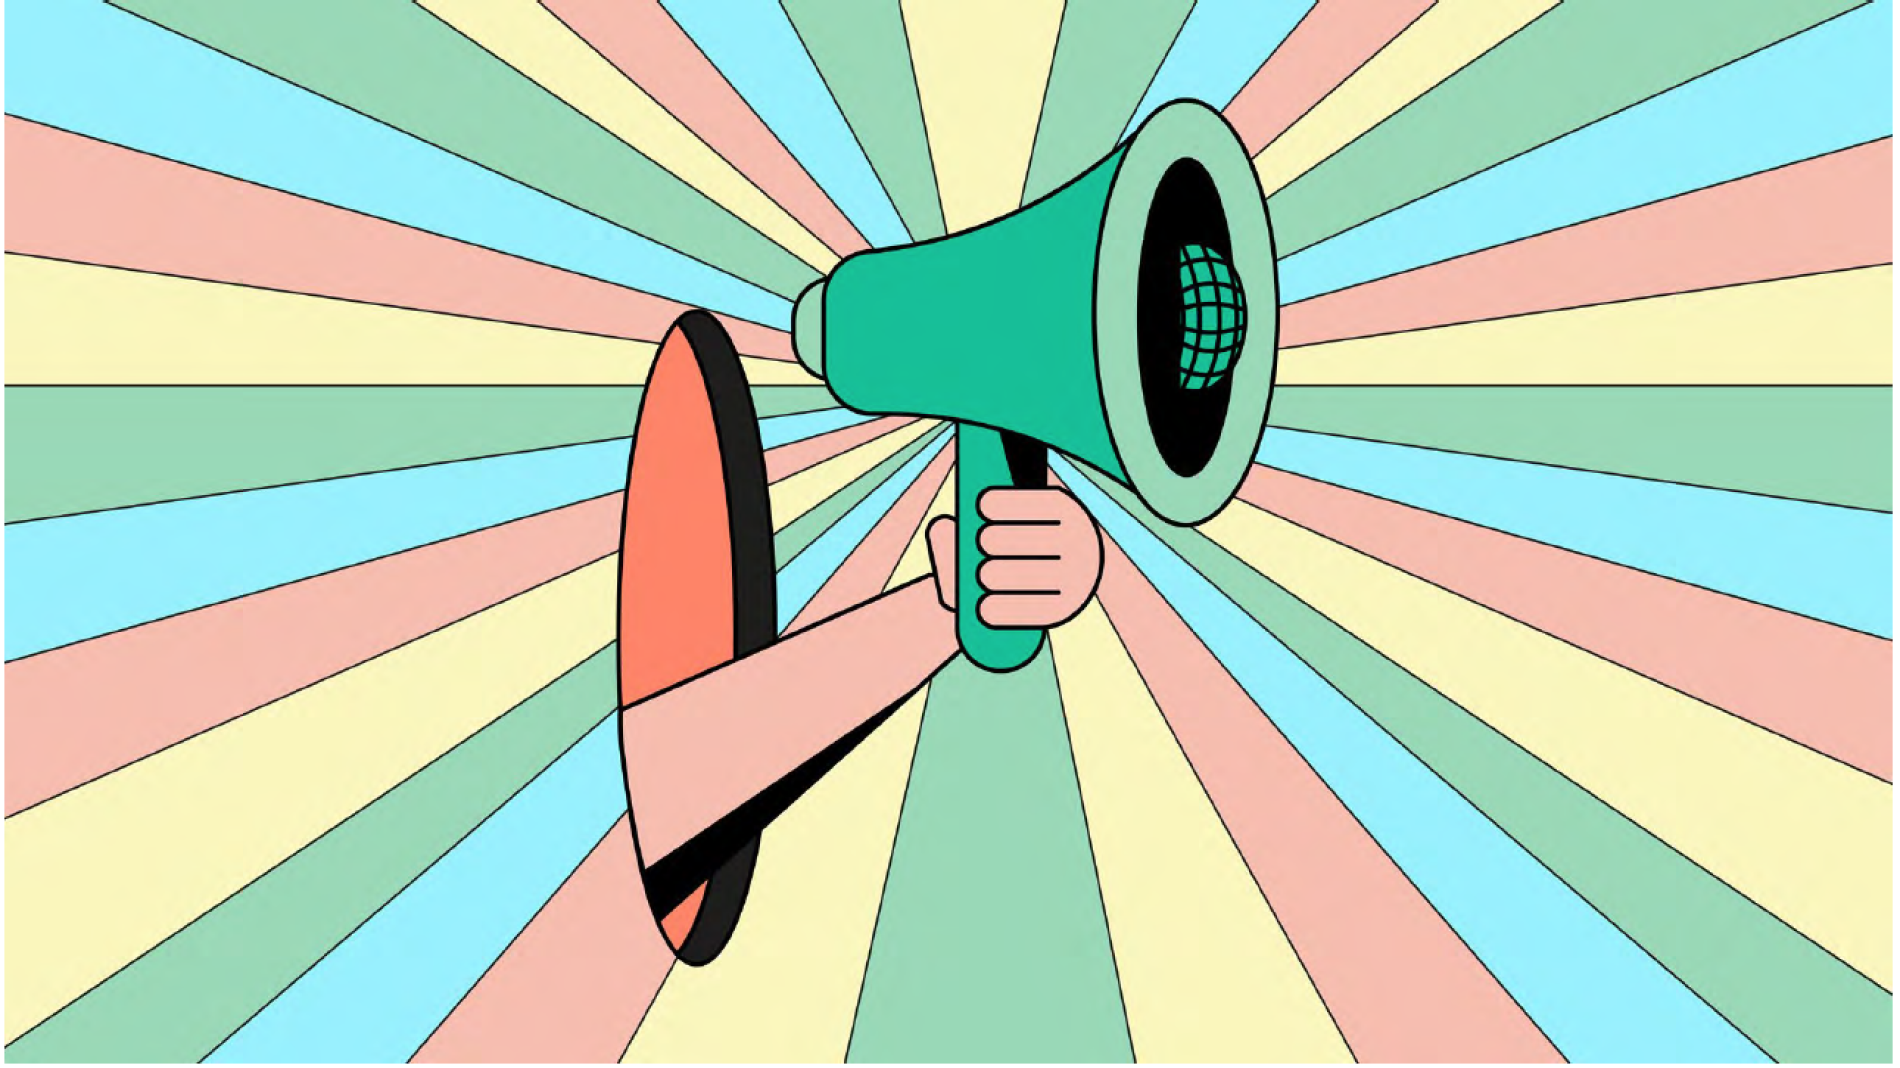 Illustration of a hand holding a megaphone